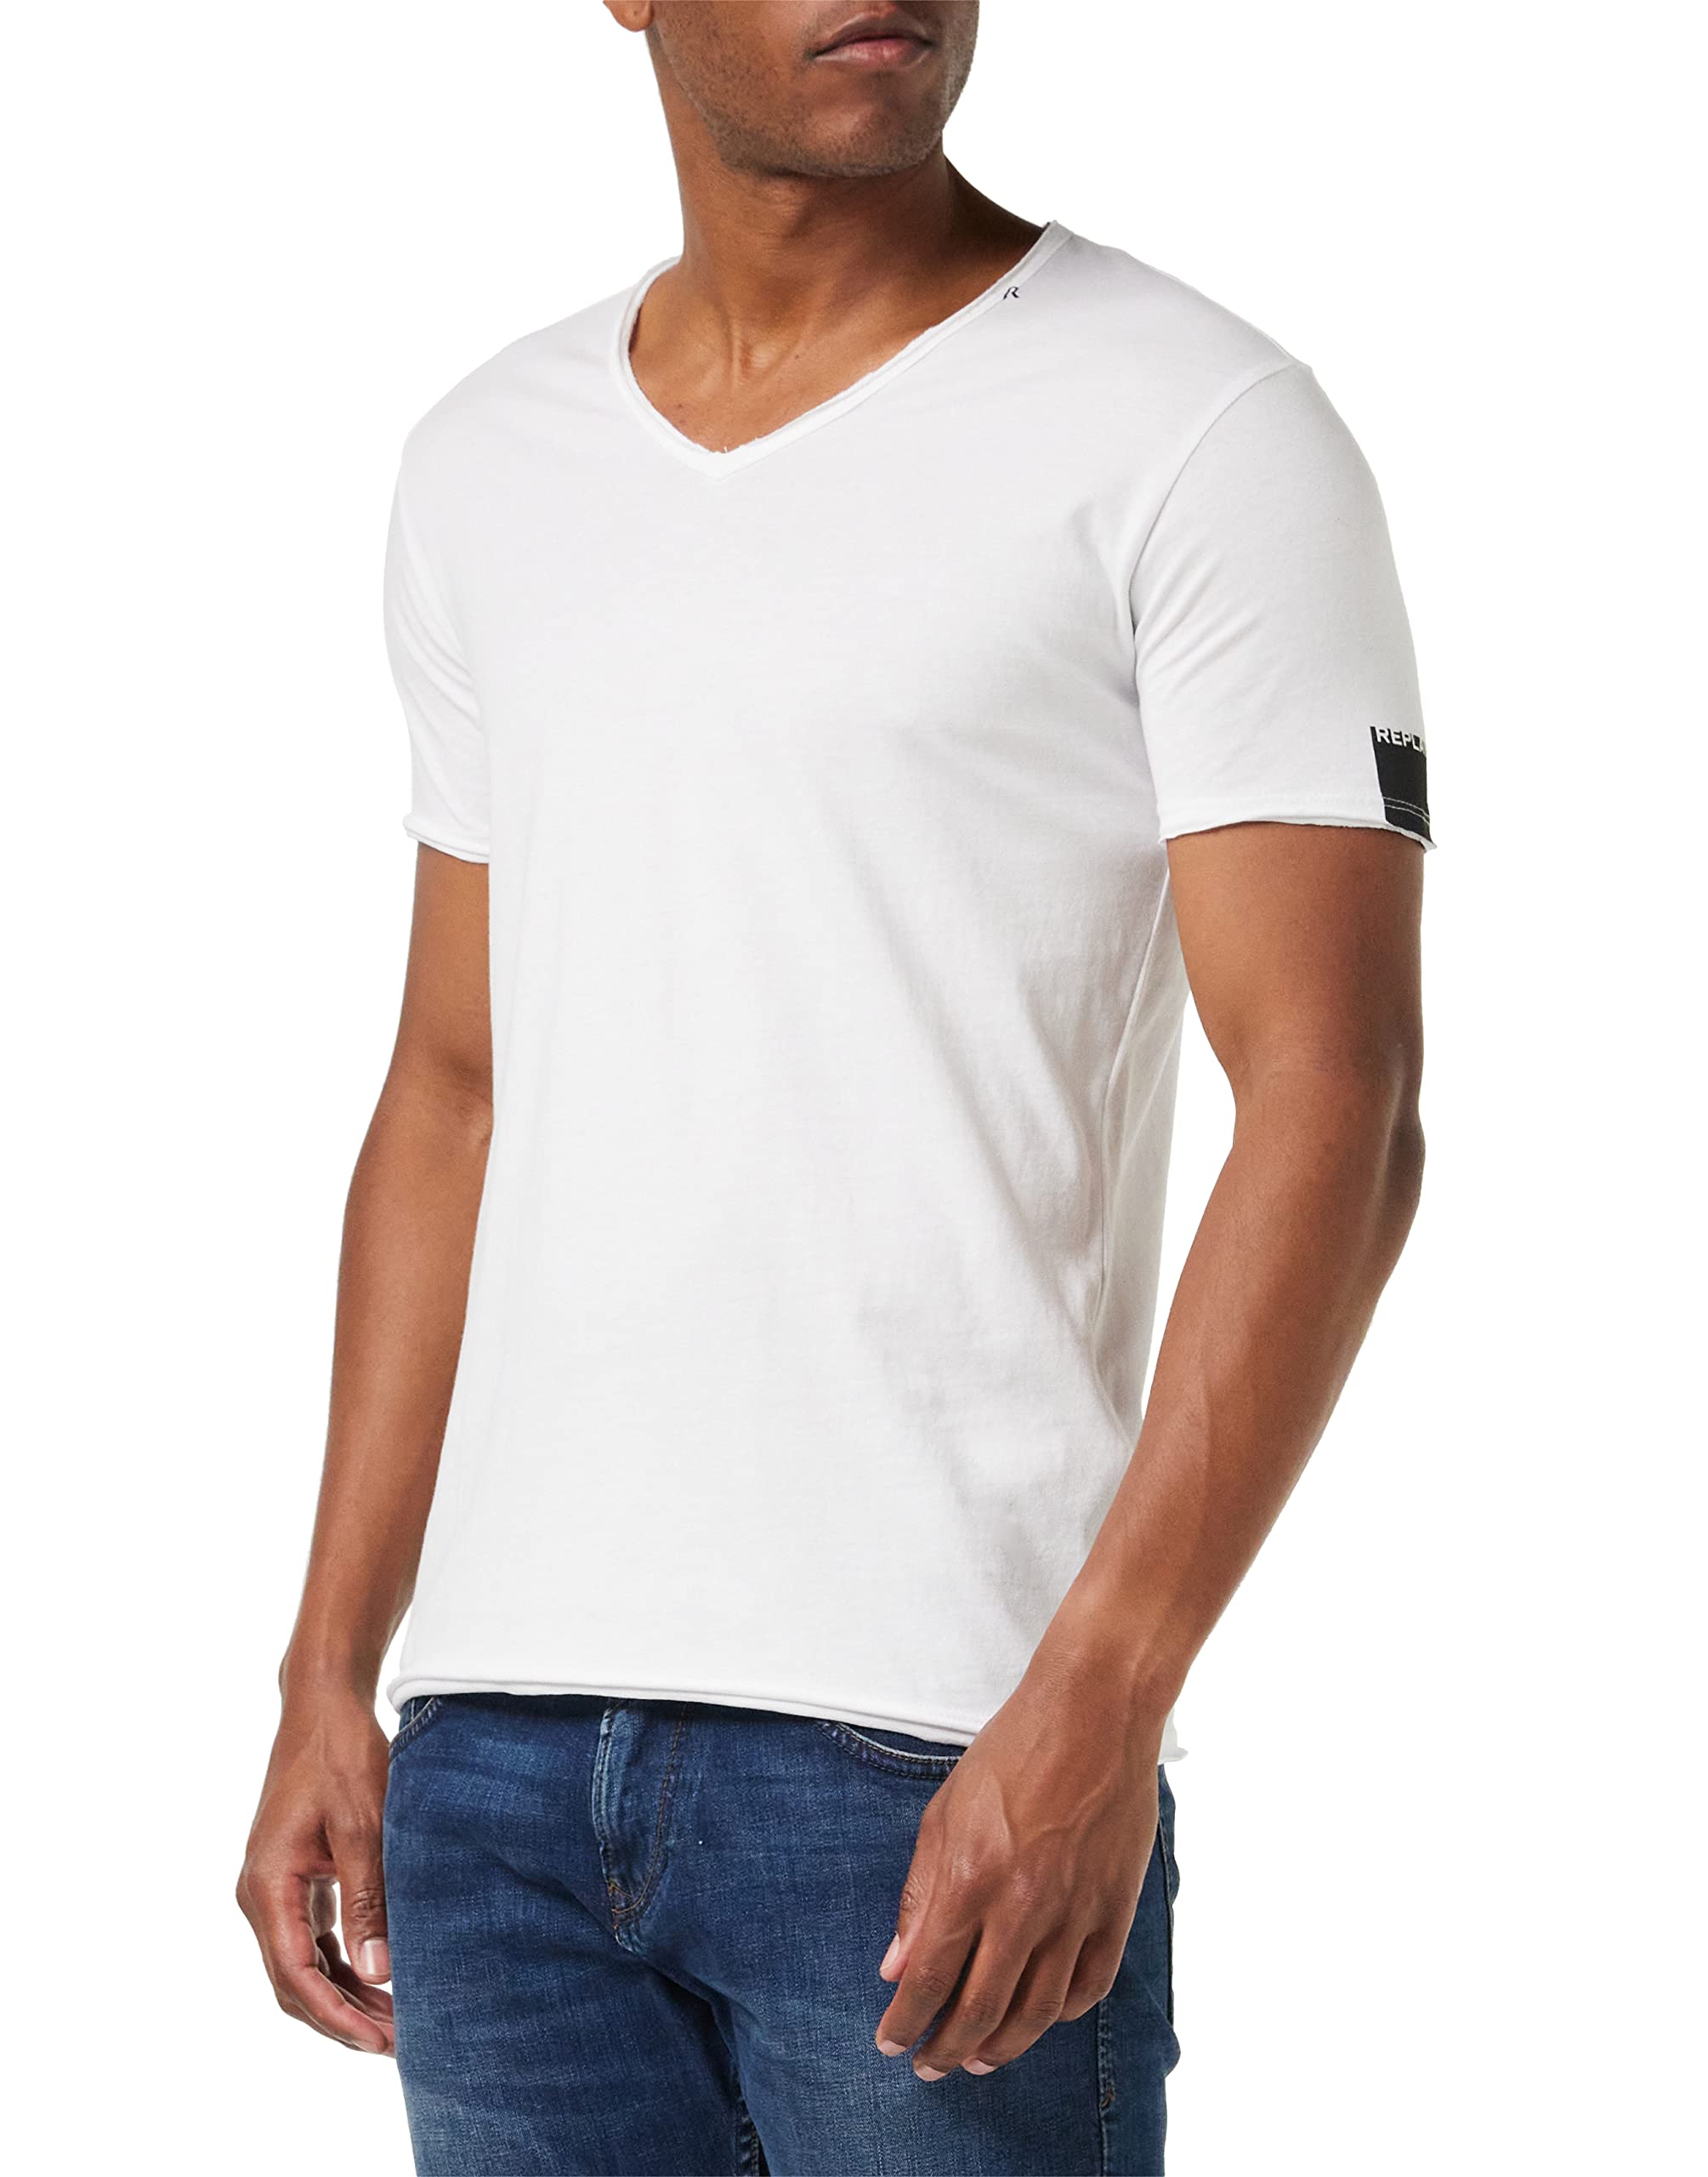 Replay Herren T-Shirt Kurzarm mit V-Ausschnitt, Optical White 001 (Weiß), S